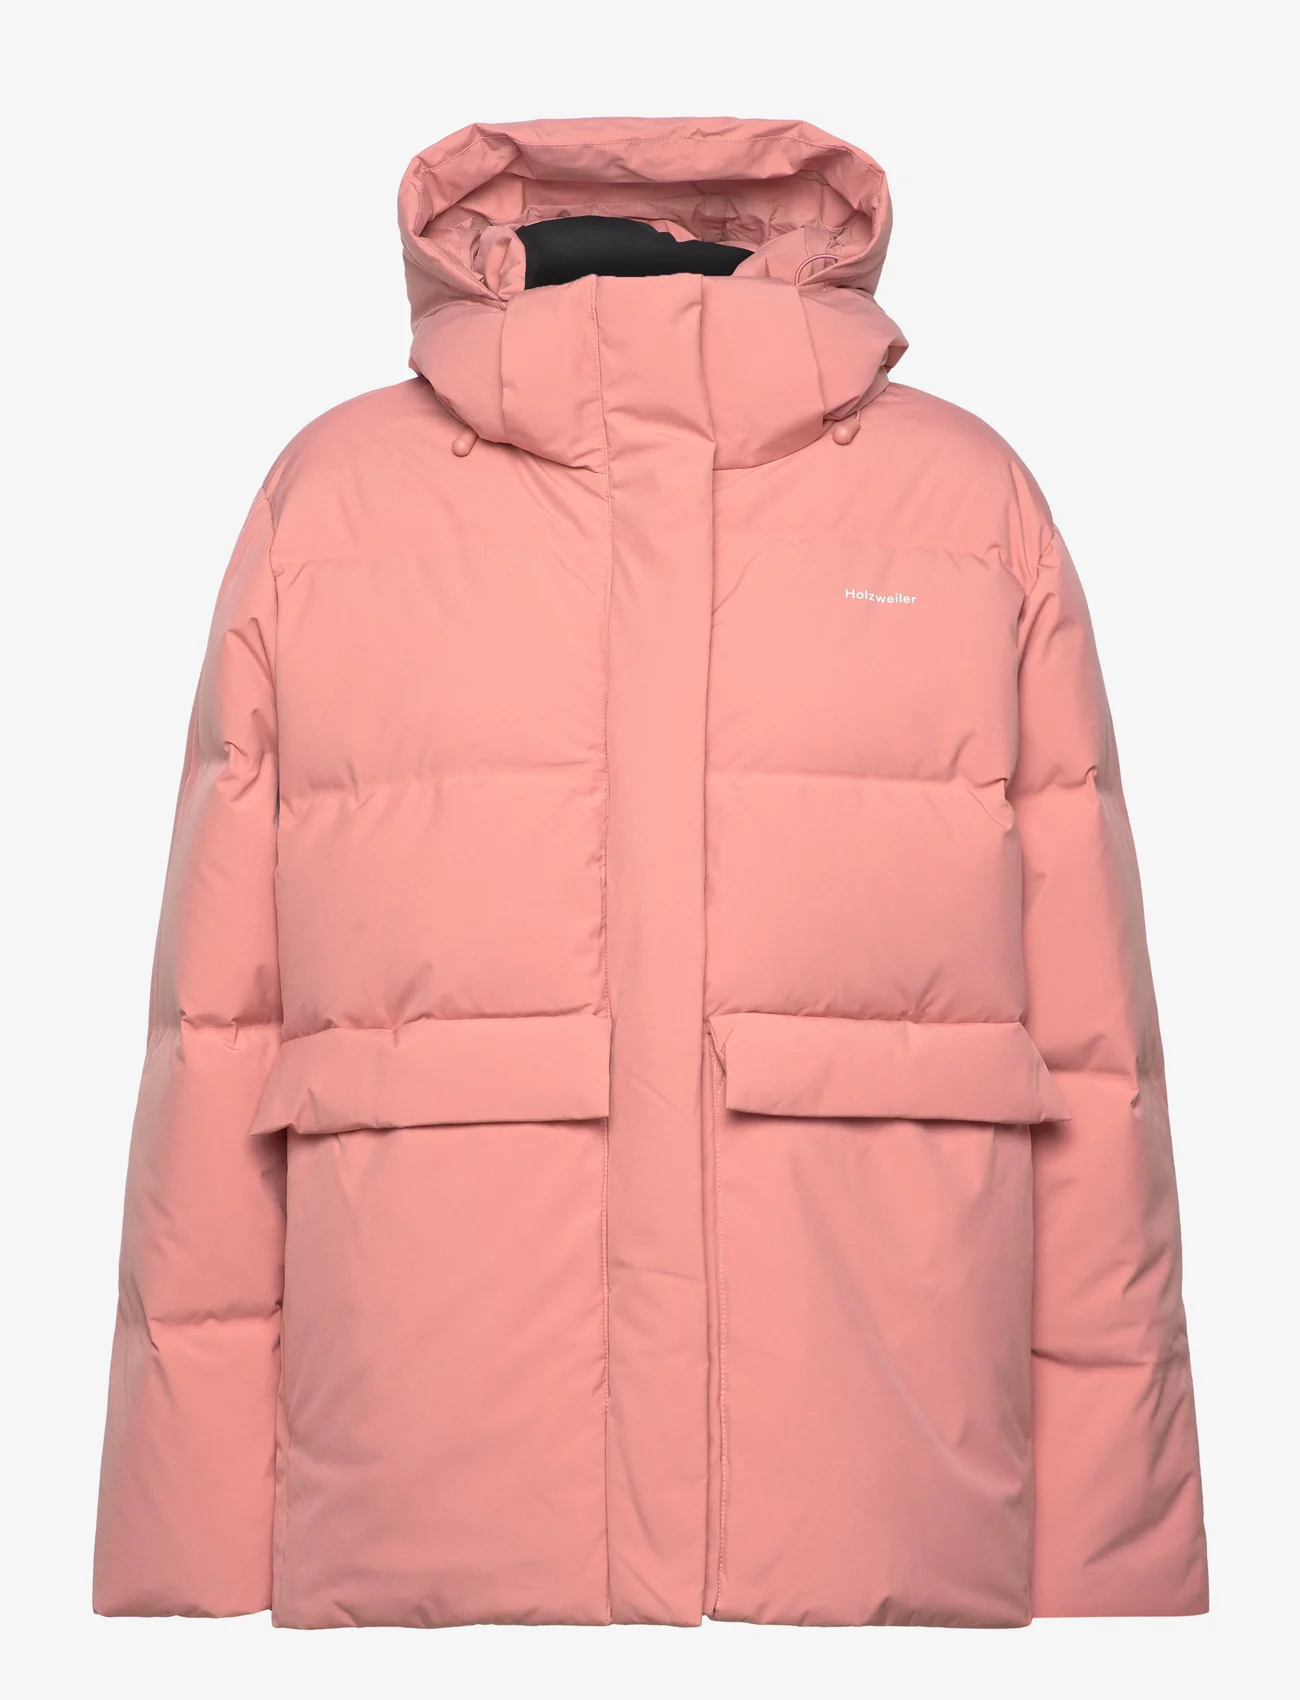 HOLZWEILER - Besseggen Down Jacket - winter jackets - pink - 0